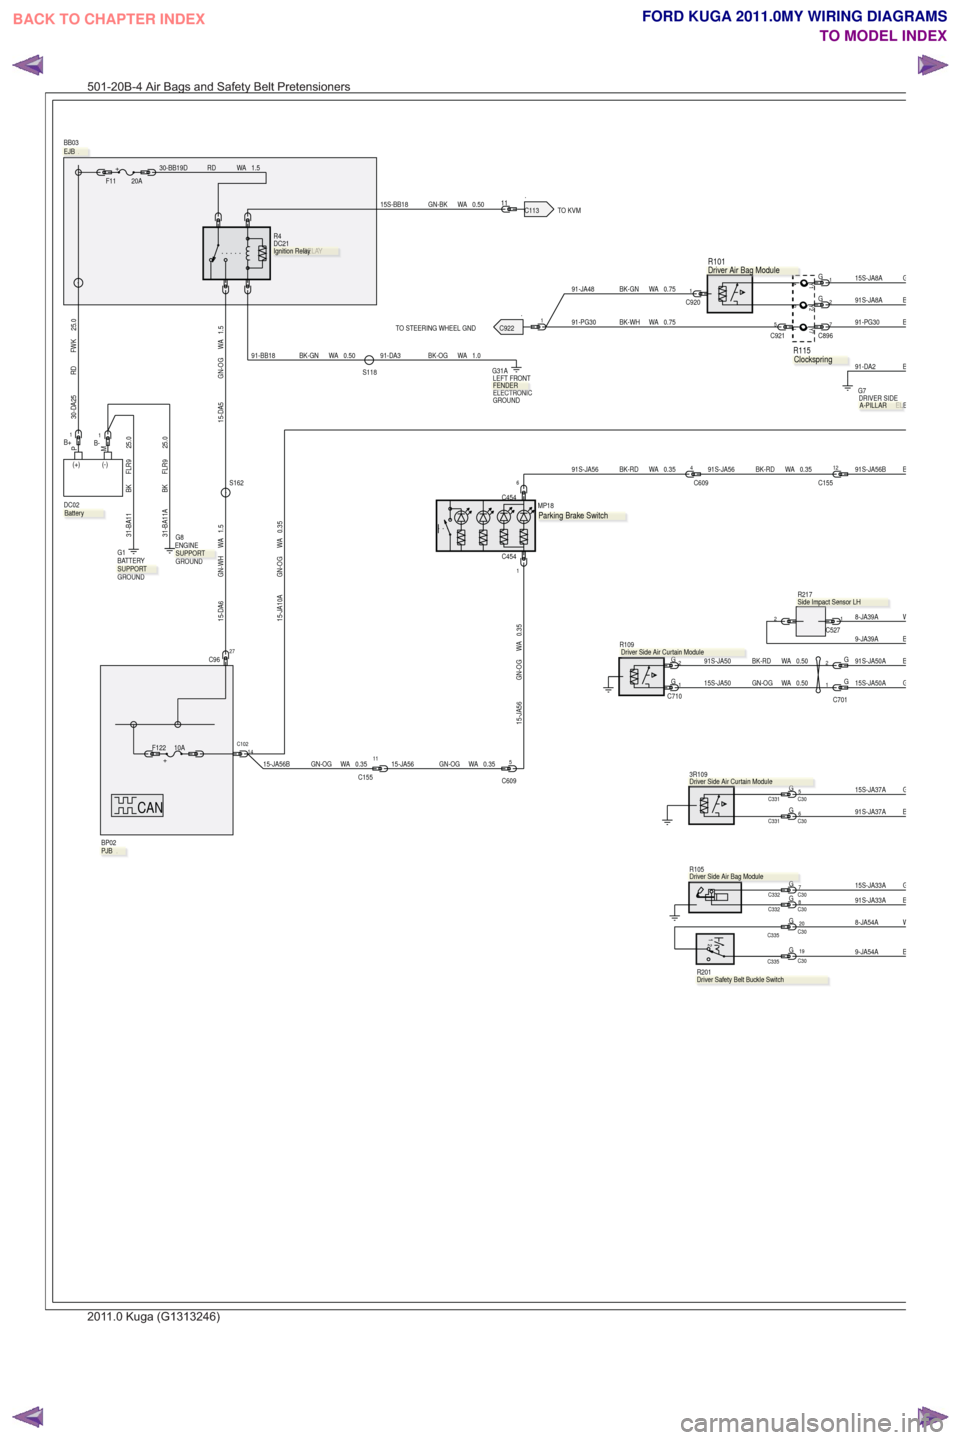 FORD KUGA 2011 1.G Wiring Diagram Workshop Manual .TO KVM
.TO STEERING WHEEL GND
CAN
B9-JA39A
2
.
R217
1C527W8-JA39A
30-DA25 RD FWK 25.0
1G
2G91S-JA8AB
G15S-JA8A
3R109
.
R105.
91S-JA33AB15S-JA33AG
91S-JA37AB
1 2
.
R201
0.35
WA
GN-OG
15-JA10A
PM
(+) (